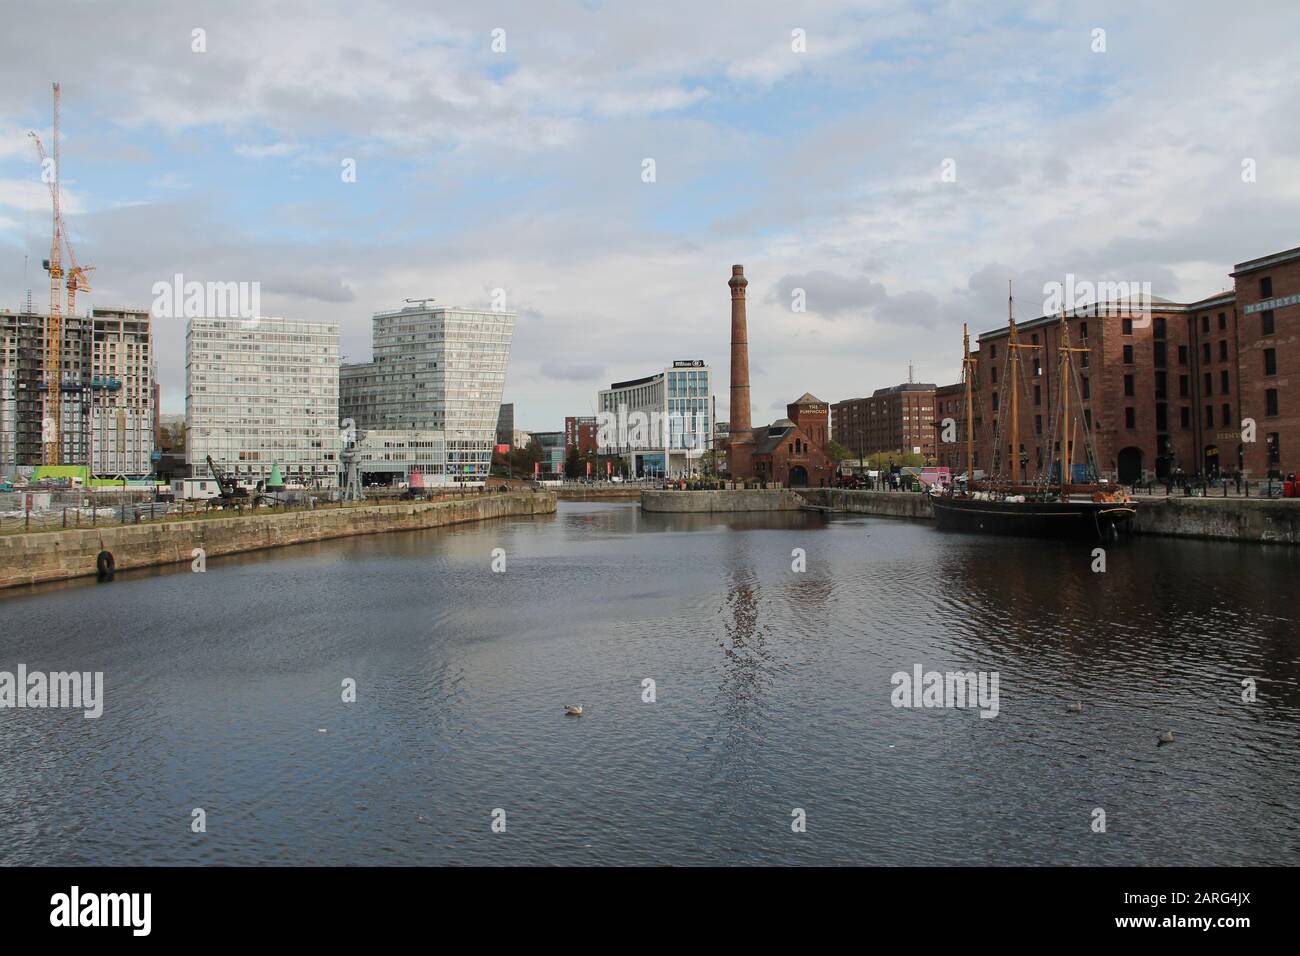 Canning Dock, Liverpool, located near Albert Dock, landscape Stock Photo